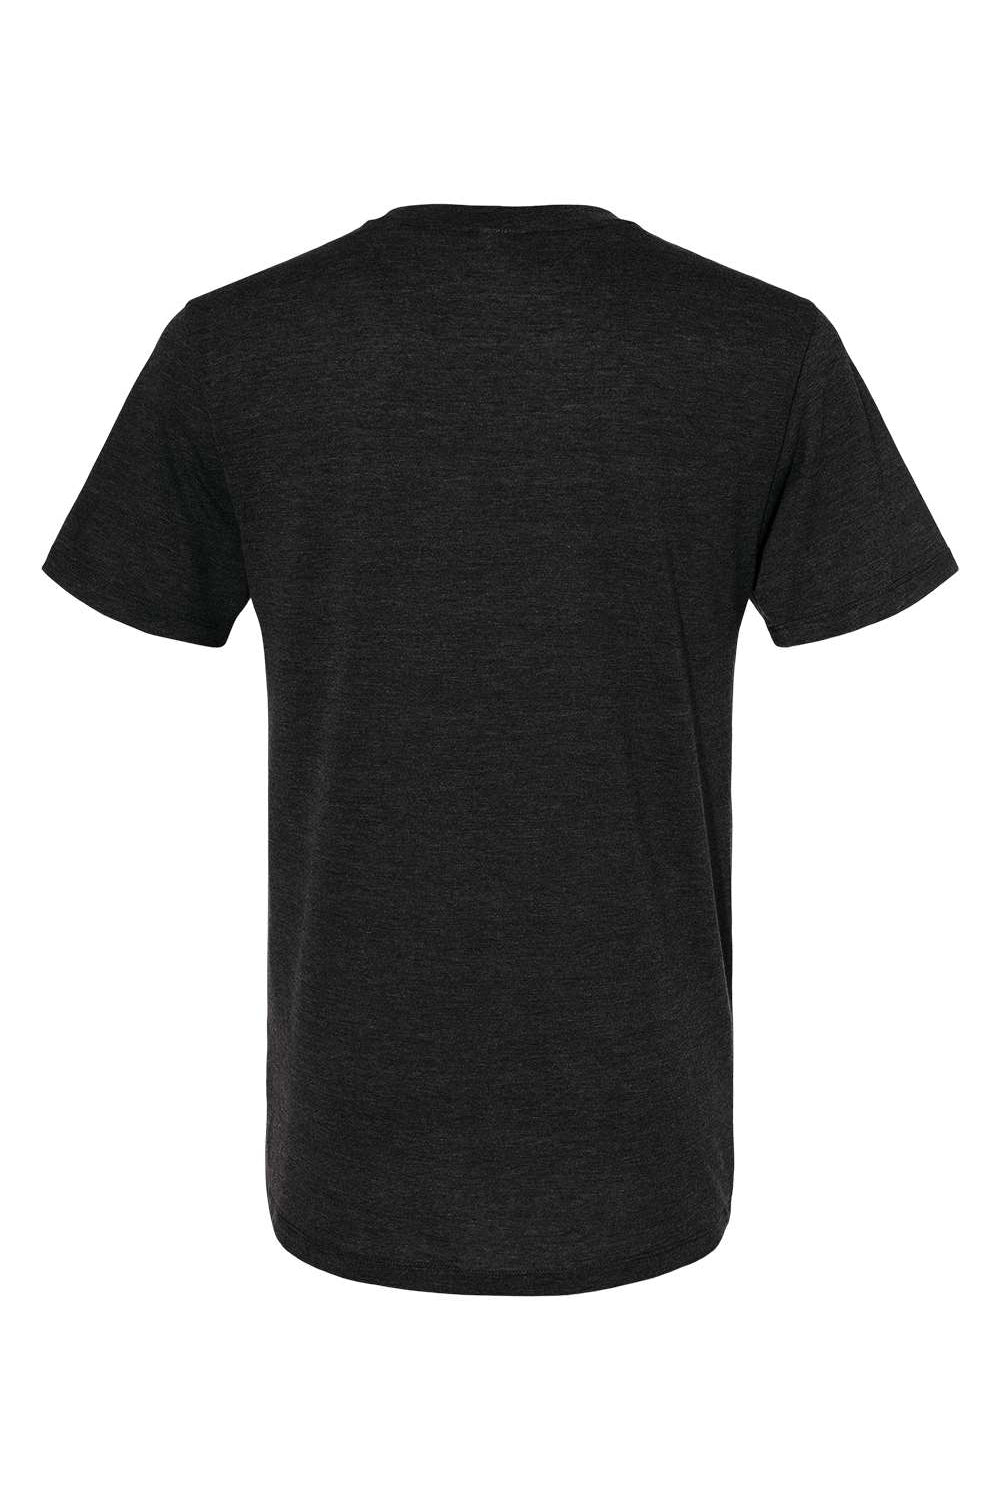 Augusta Sportswear 3065 Mens Short Sleeve Crewneck T-Shirt Heather Black Flat Back